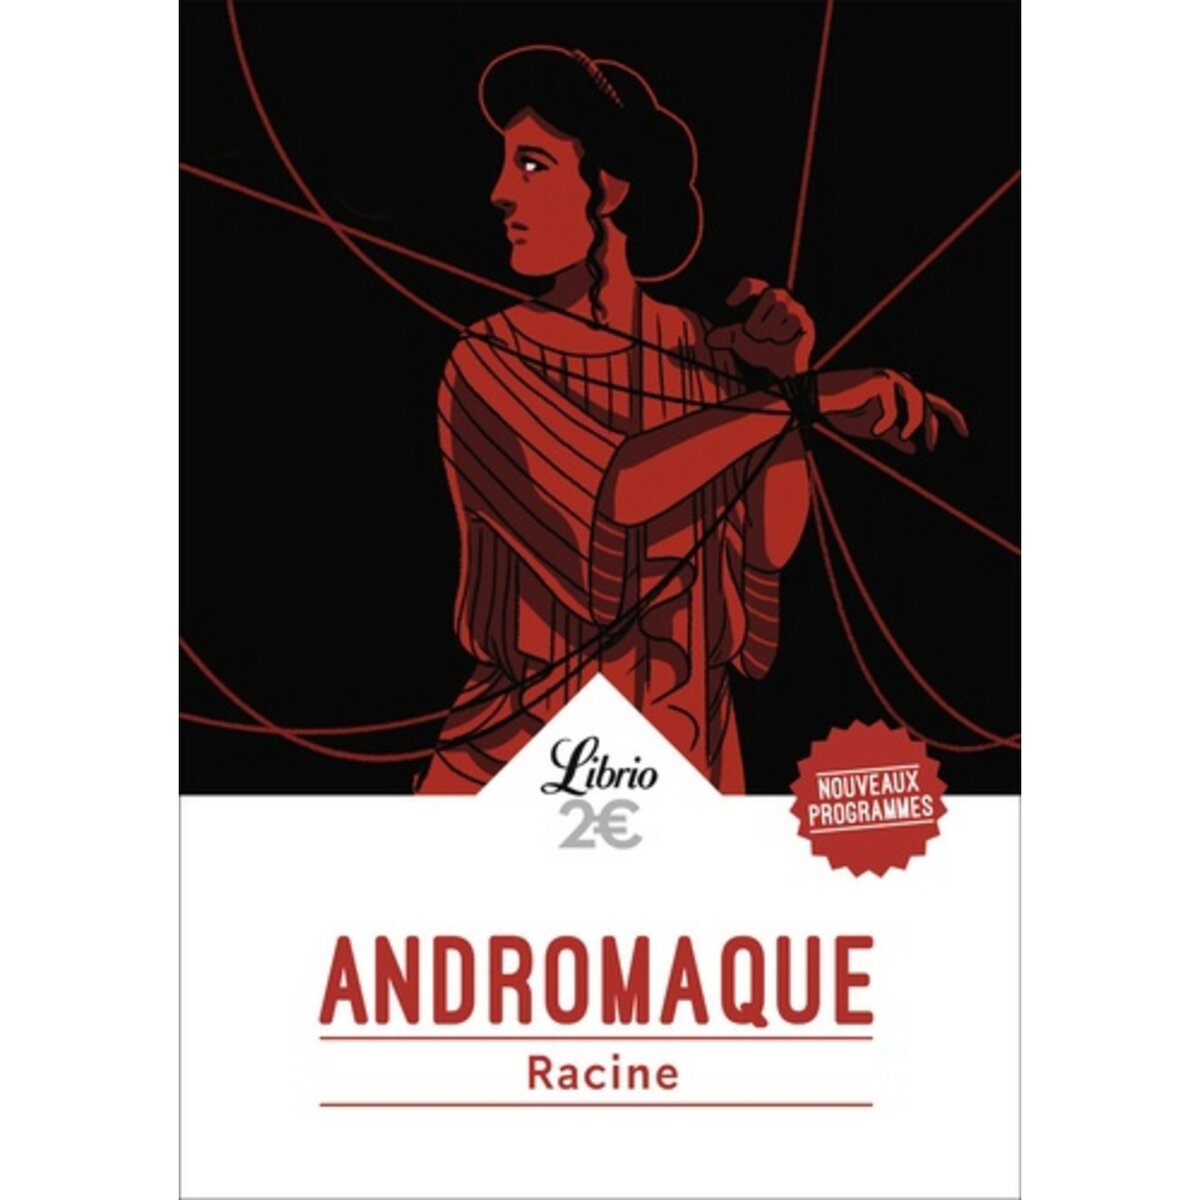  ANDROMAQUE, Racine Jean